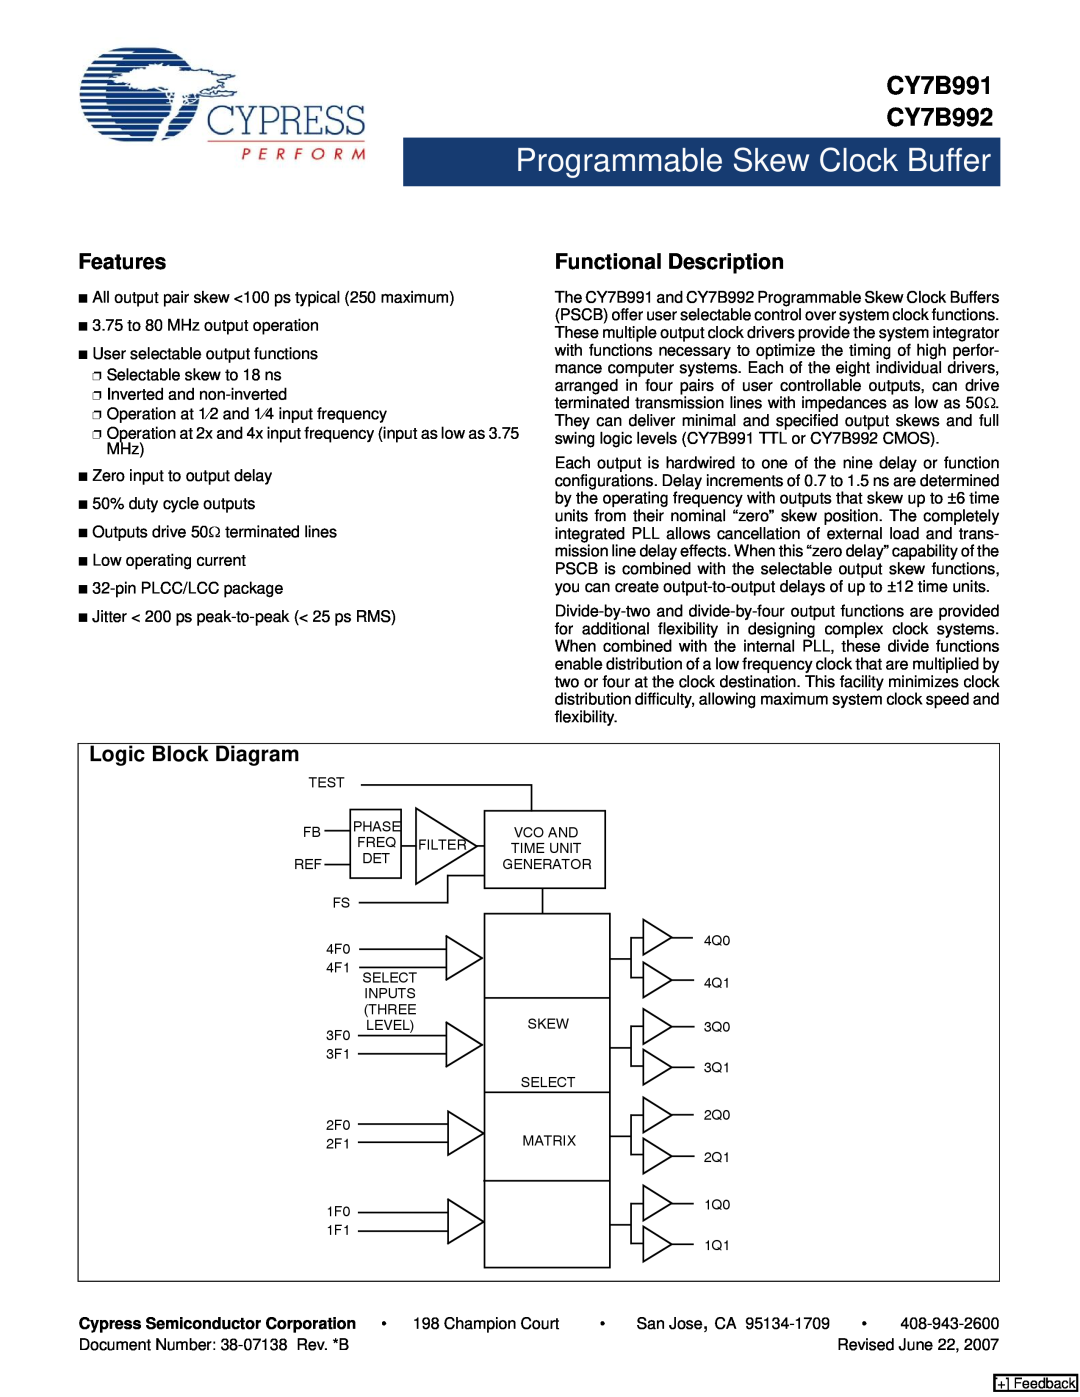 Cypress manual CY7B991 CY7B992, Features, Functional Description, Logic Block Diagram, Programmable Skew Clock Buffer 